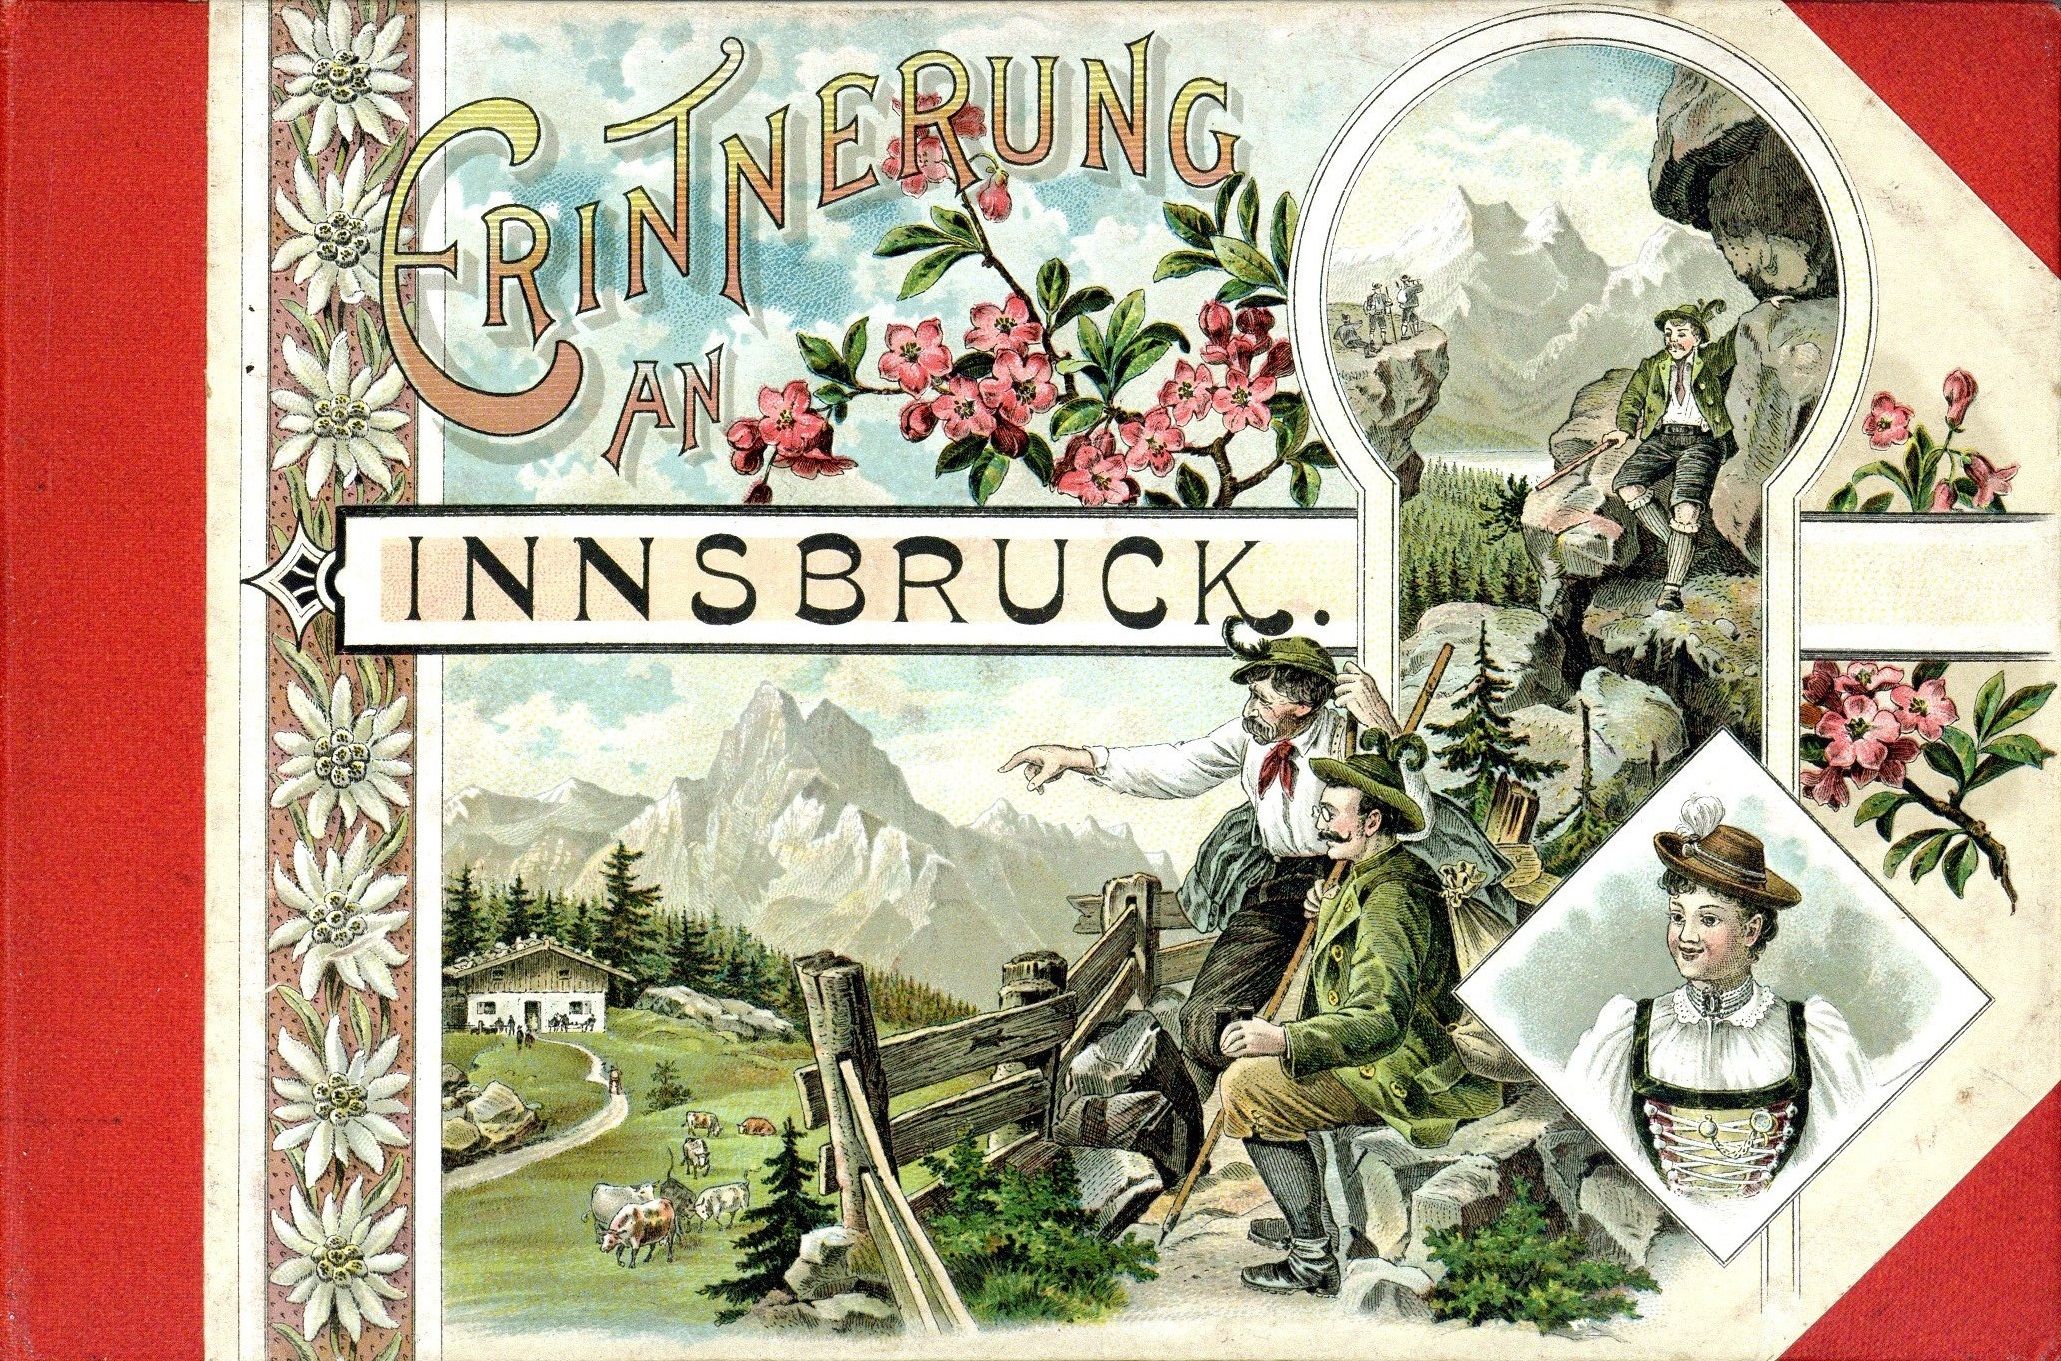 Innsbruck-Ansichten Aus Dem Verlag Ottmar Zieher, Teil 4